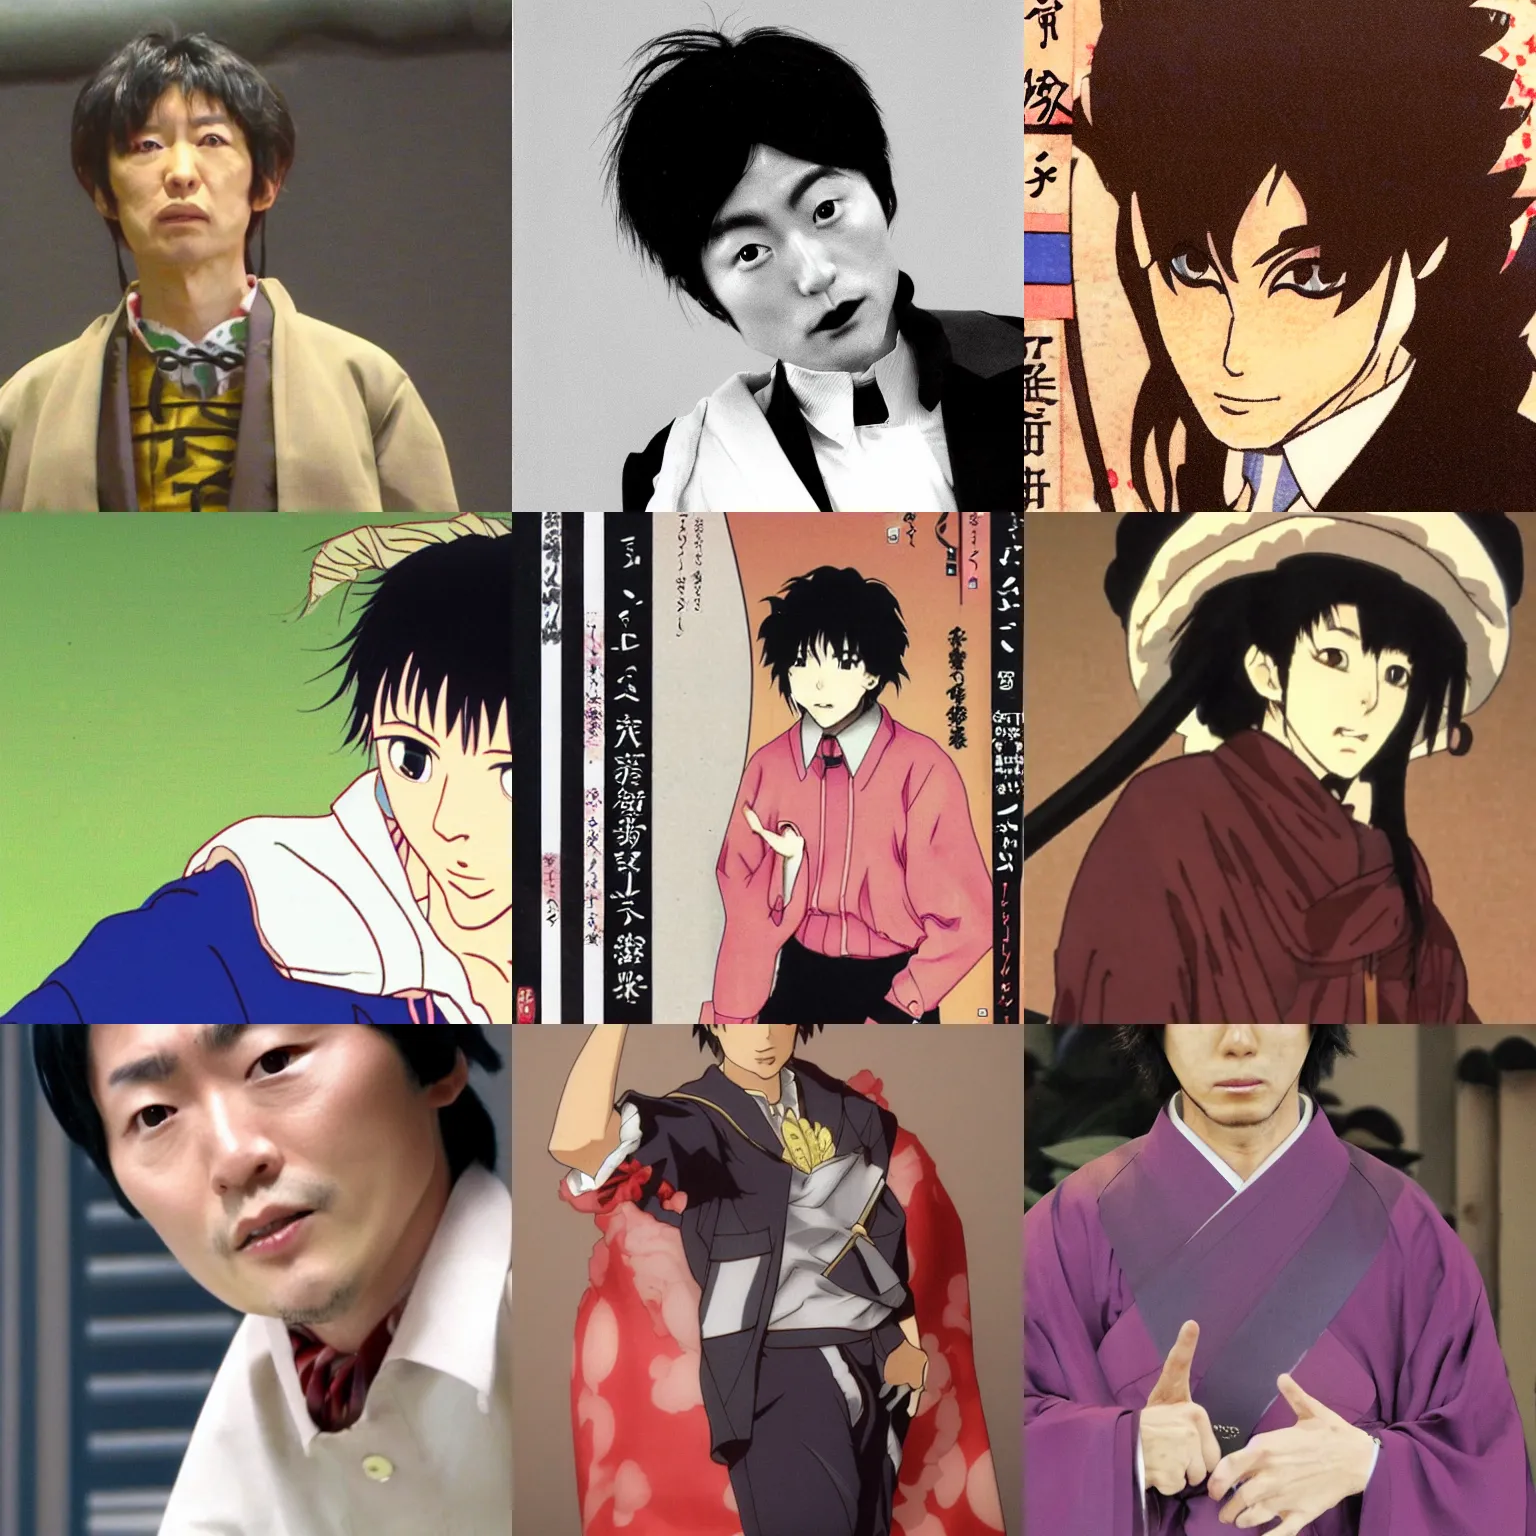 Prompt: araki hirohiko as a character in usogui